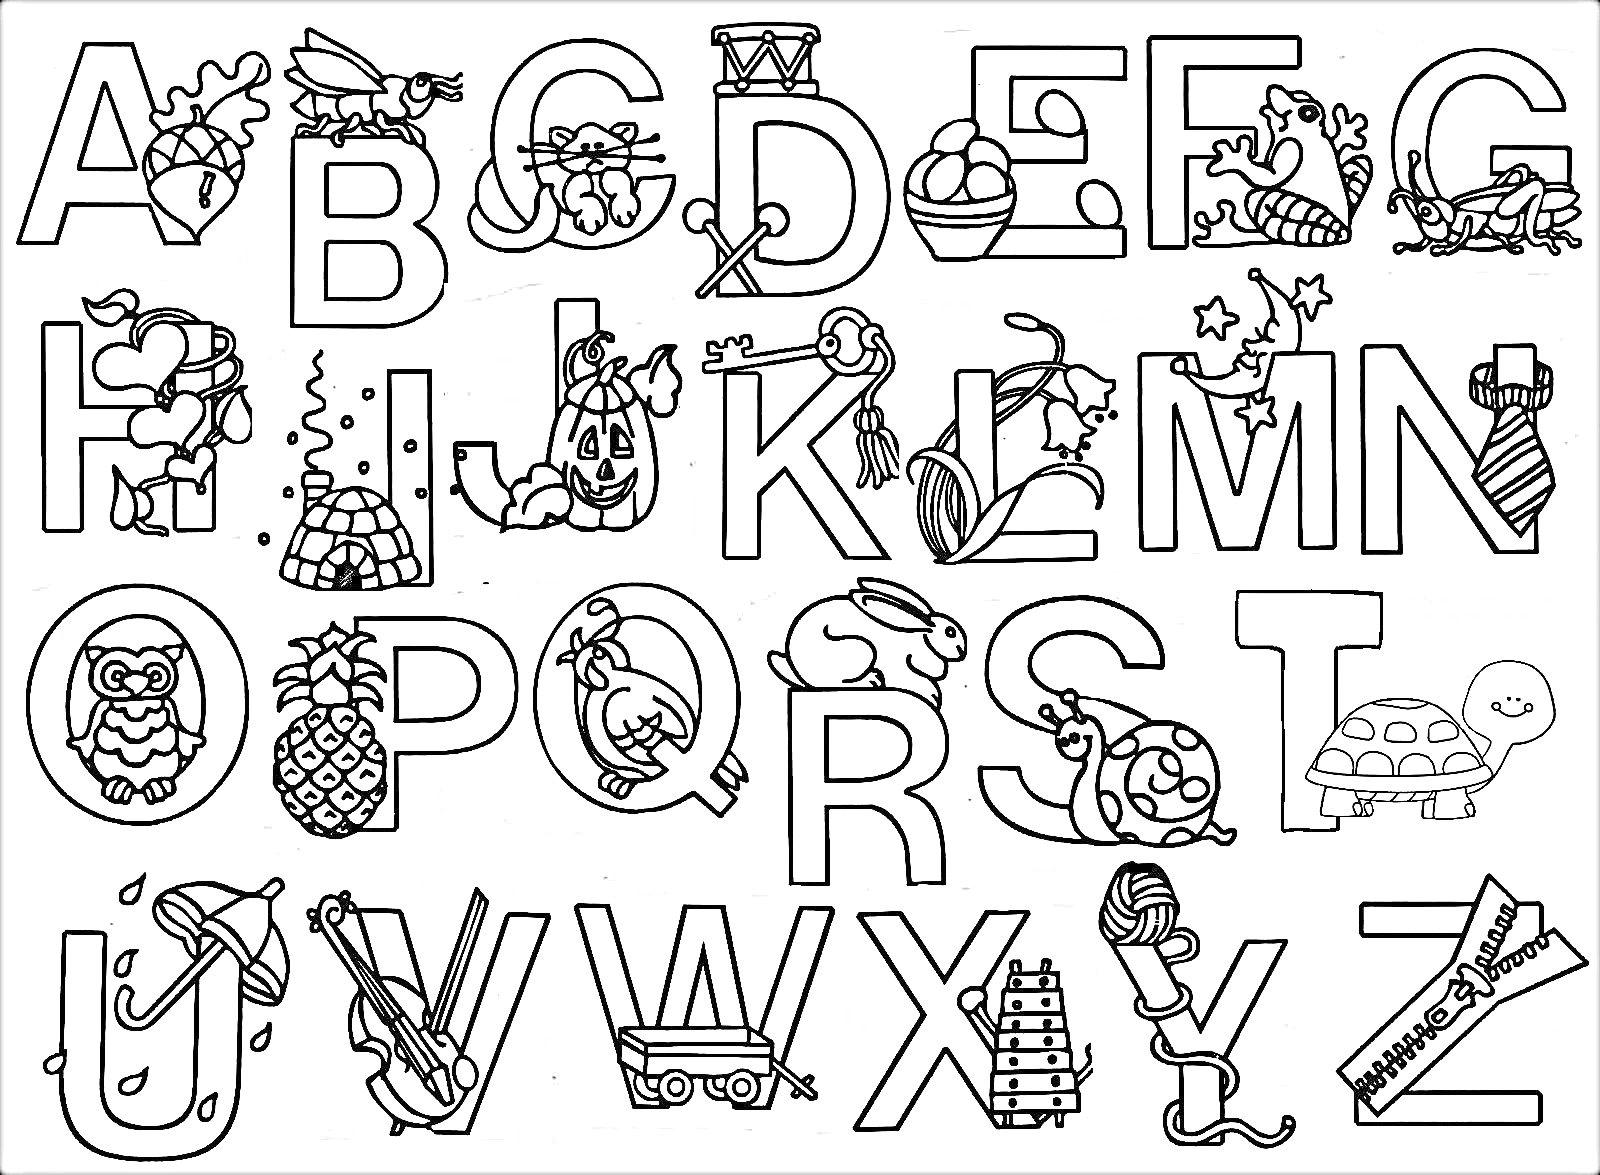 Раскраска Алфавит с элементами, включающими ангела, пчелу, чашку, бедуина, яйцо, лягушку, ключ, льва, корону, мышь, носорога, галстук, сову, ананас, королеву, кролика, солнце, черепаху, рентген, йо-йо, зебру.